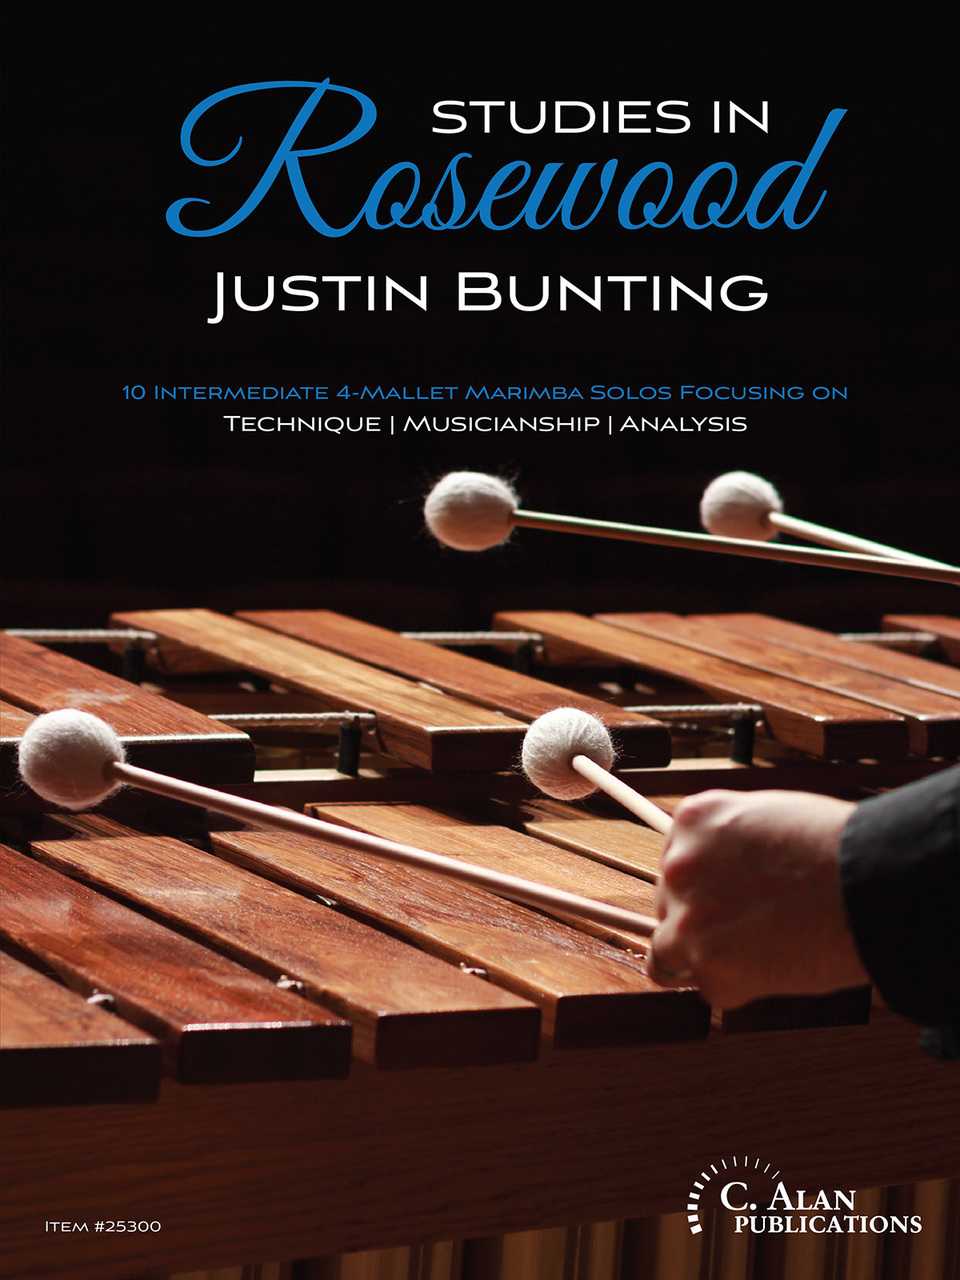 Studies in Rosewood by Justin Bunting